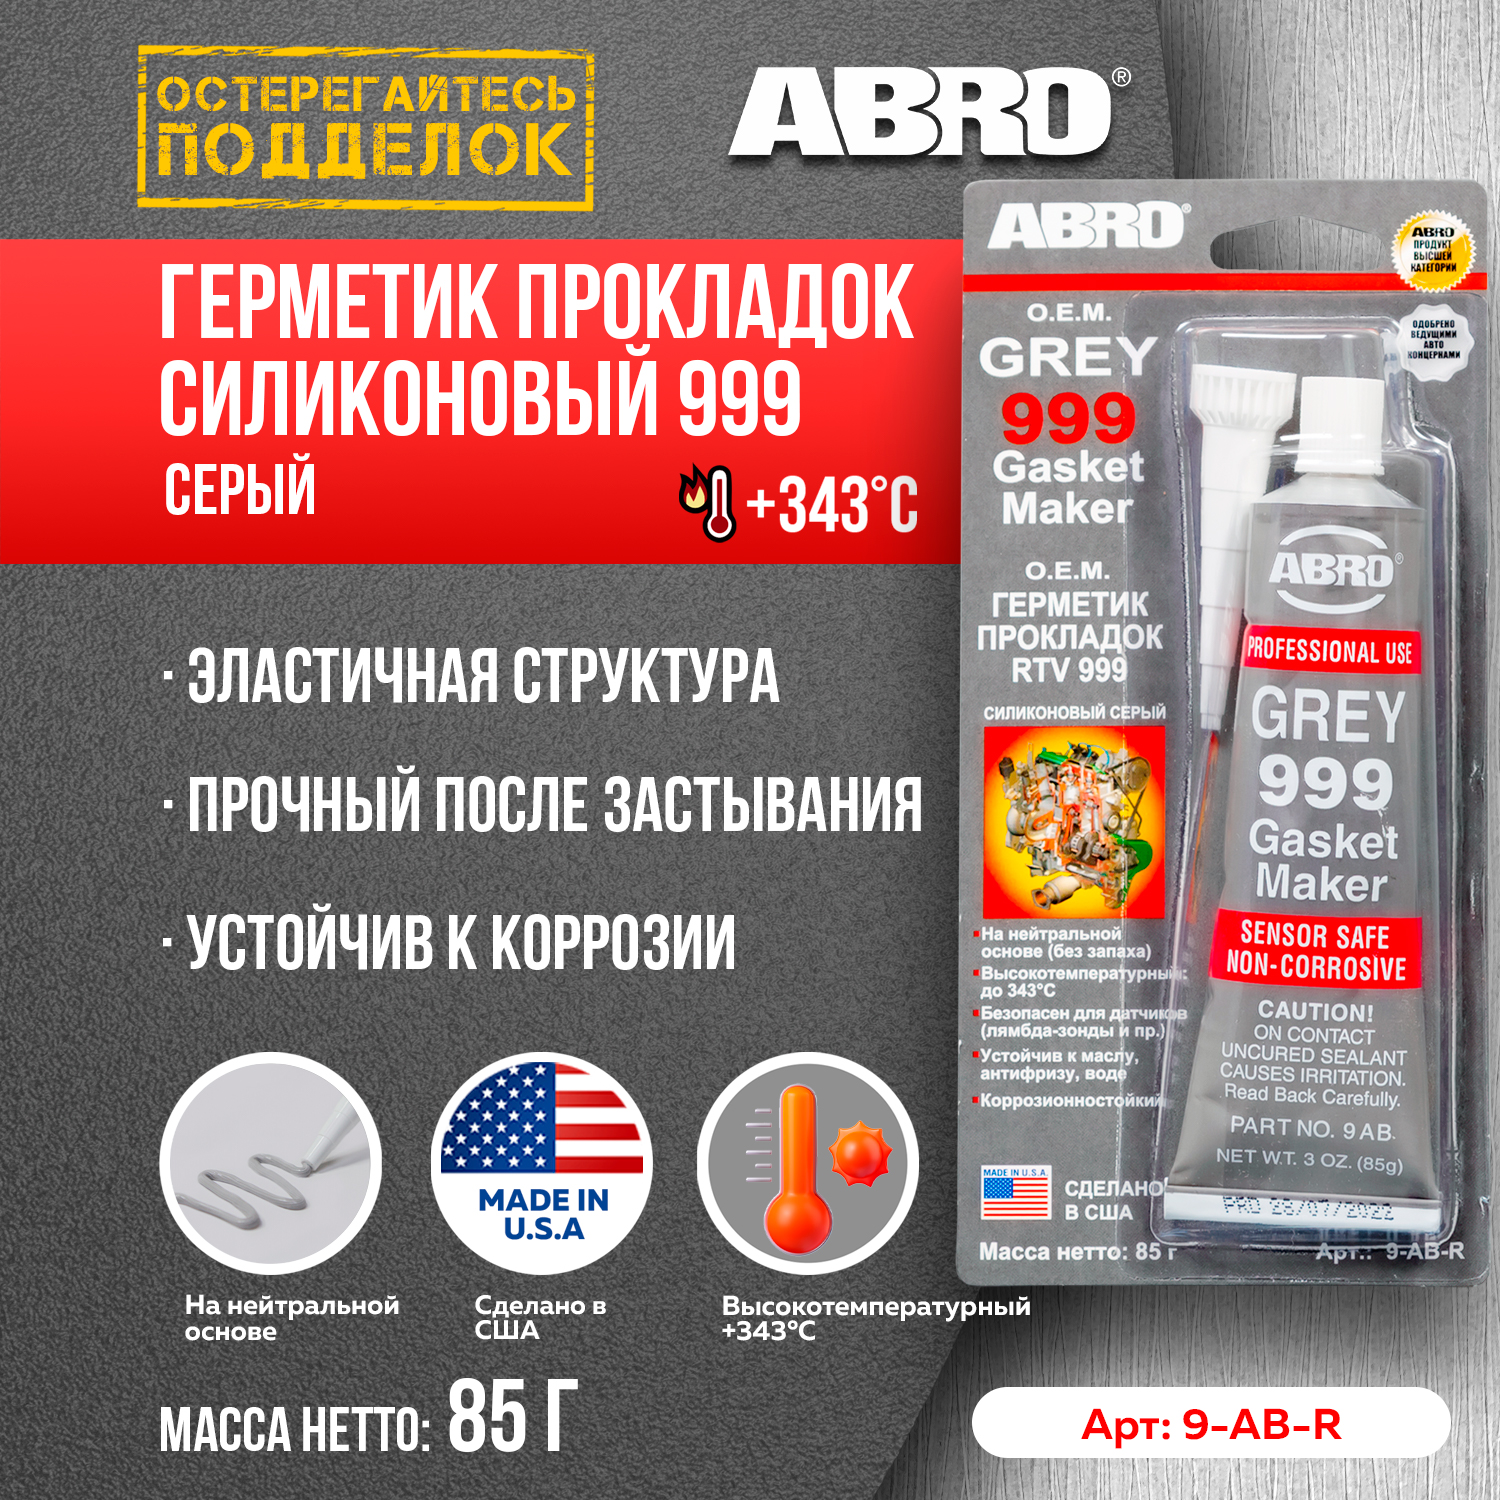 ABRO Герметик прокладок 999 серый USA 85 гр 9-AB-R - купить в Москве, цены на Мегамаркет